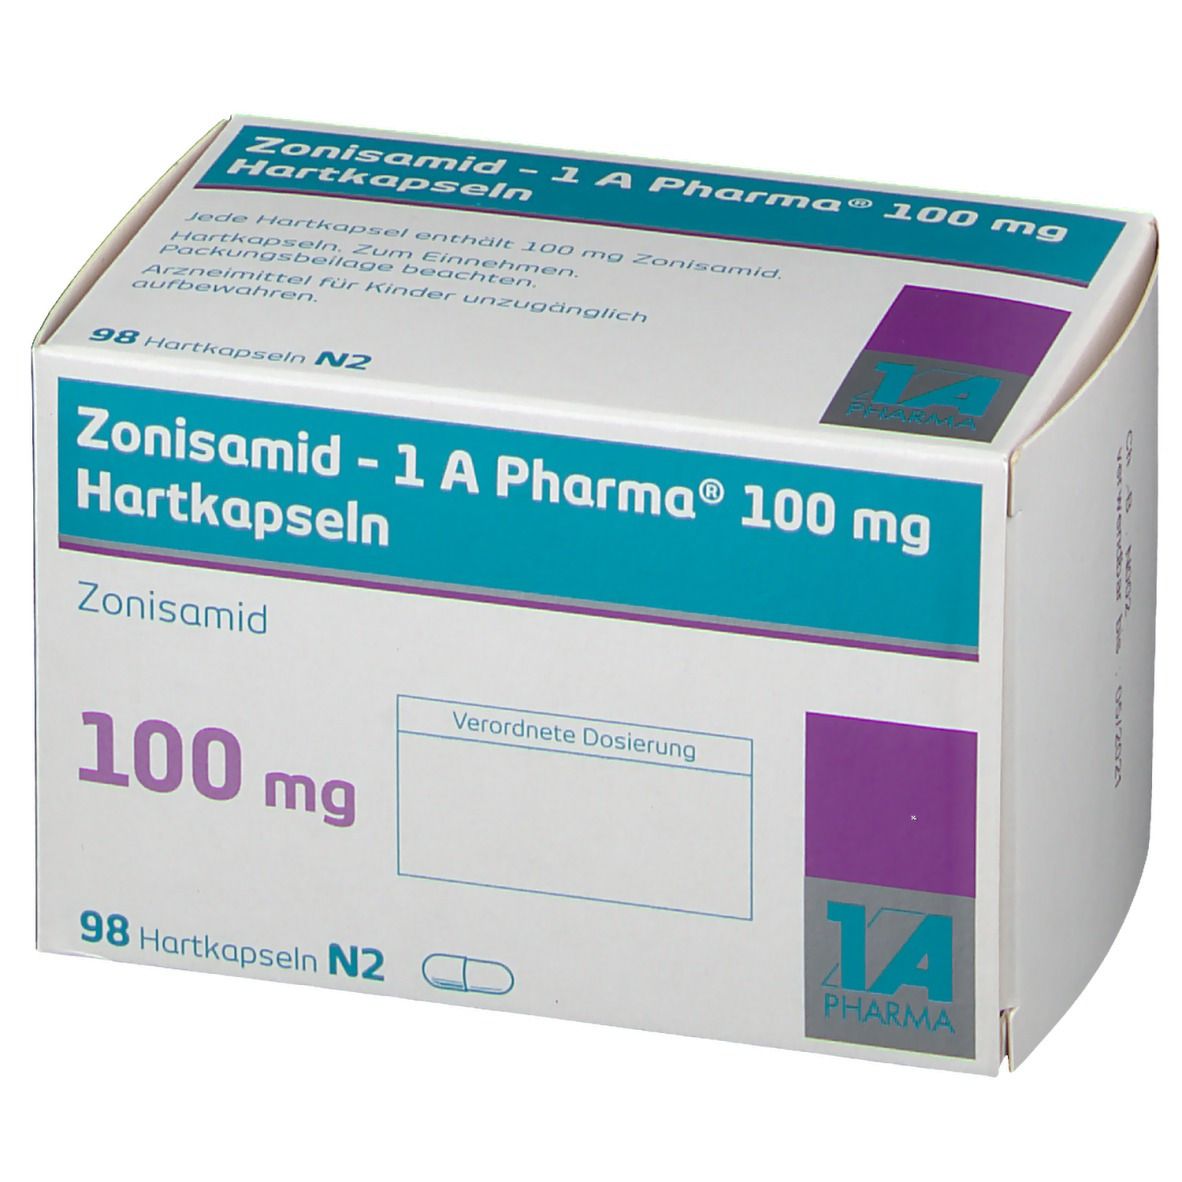 Zonisamid - 1 A Pharma® 100 mg